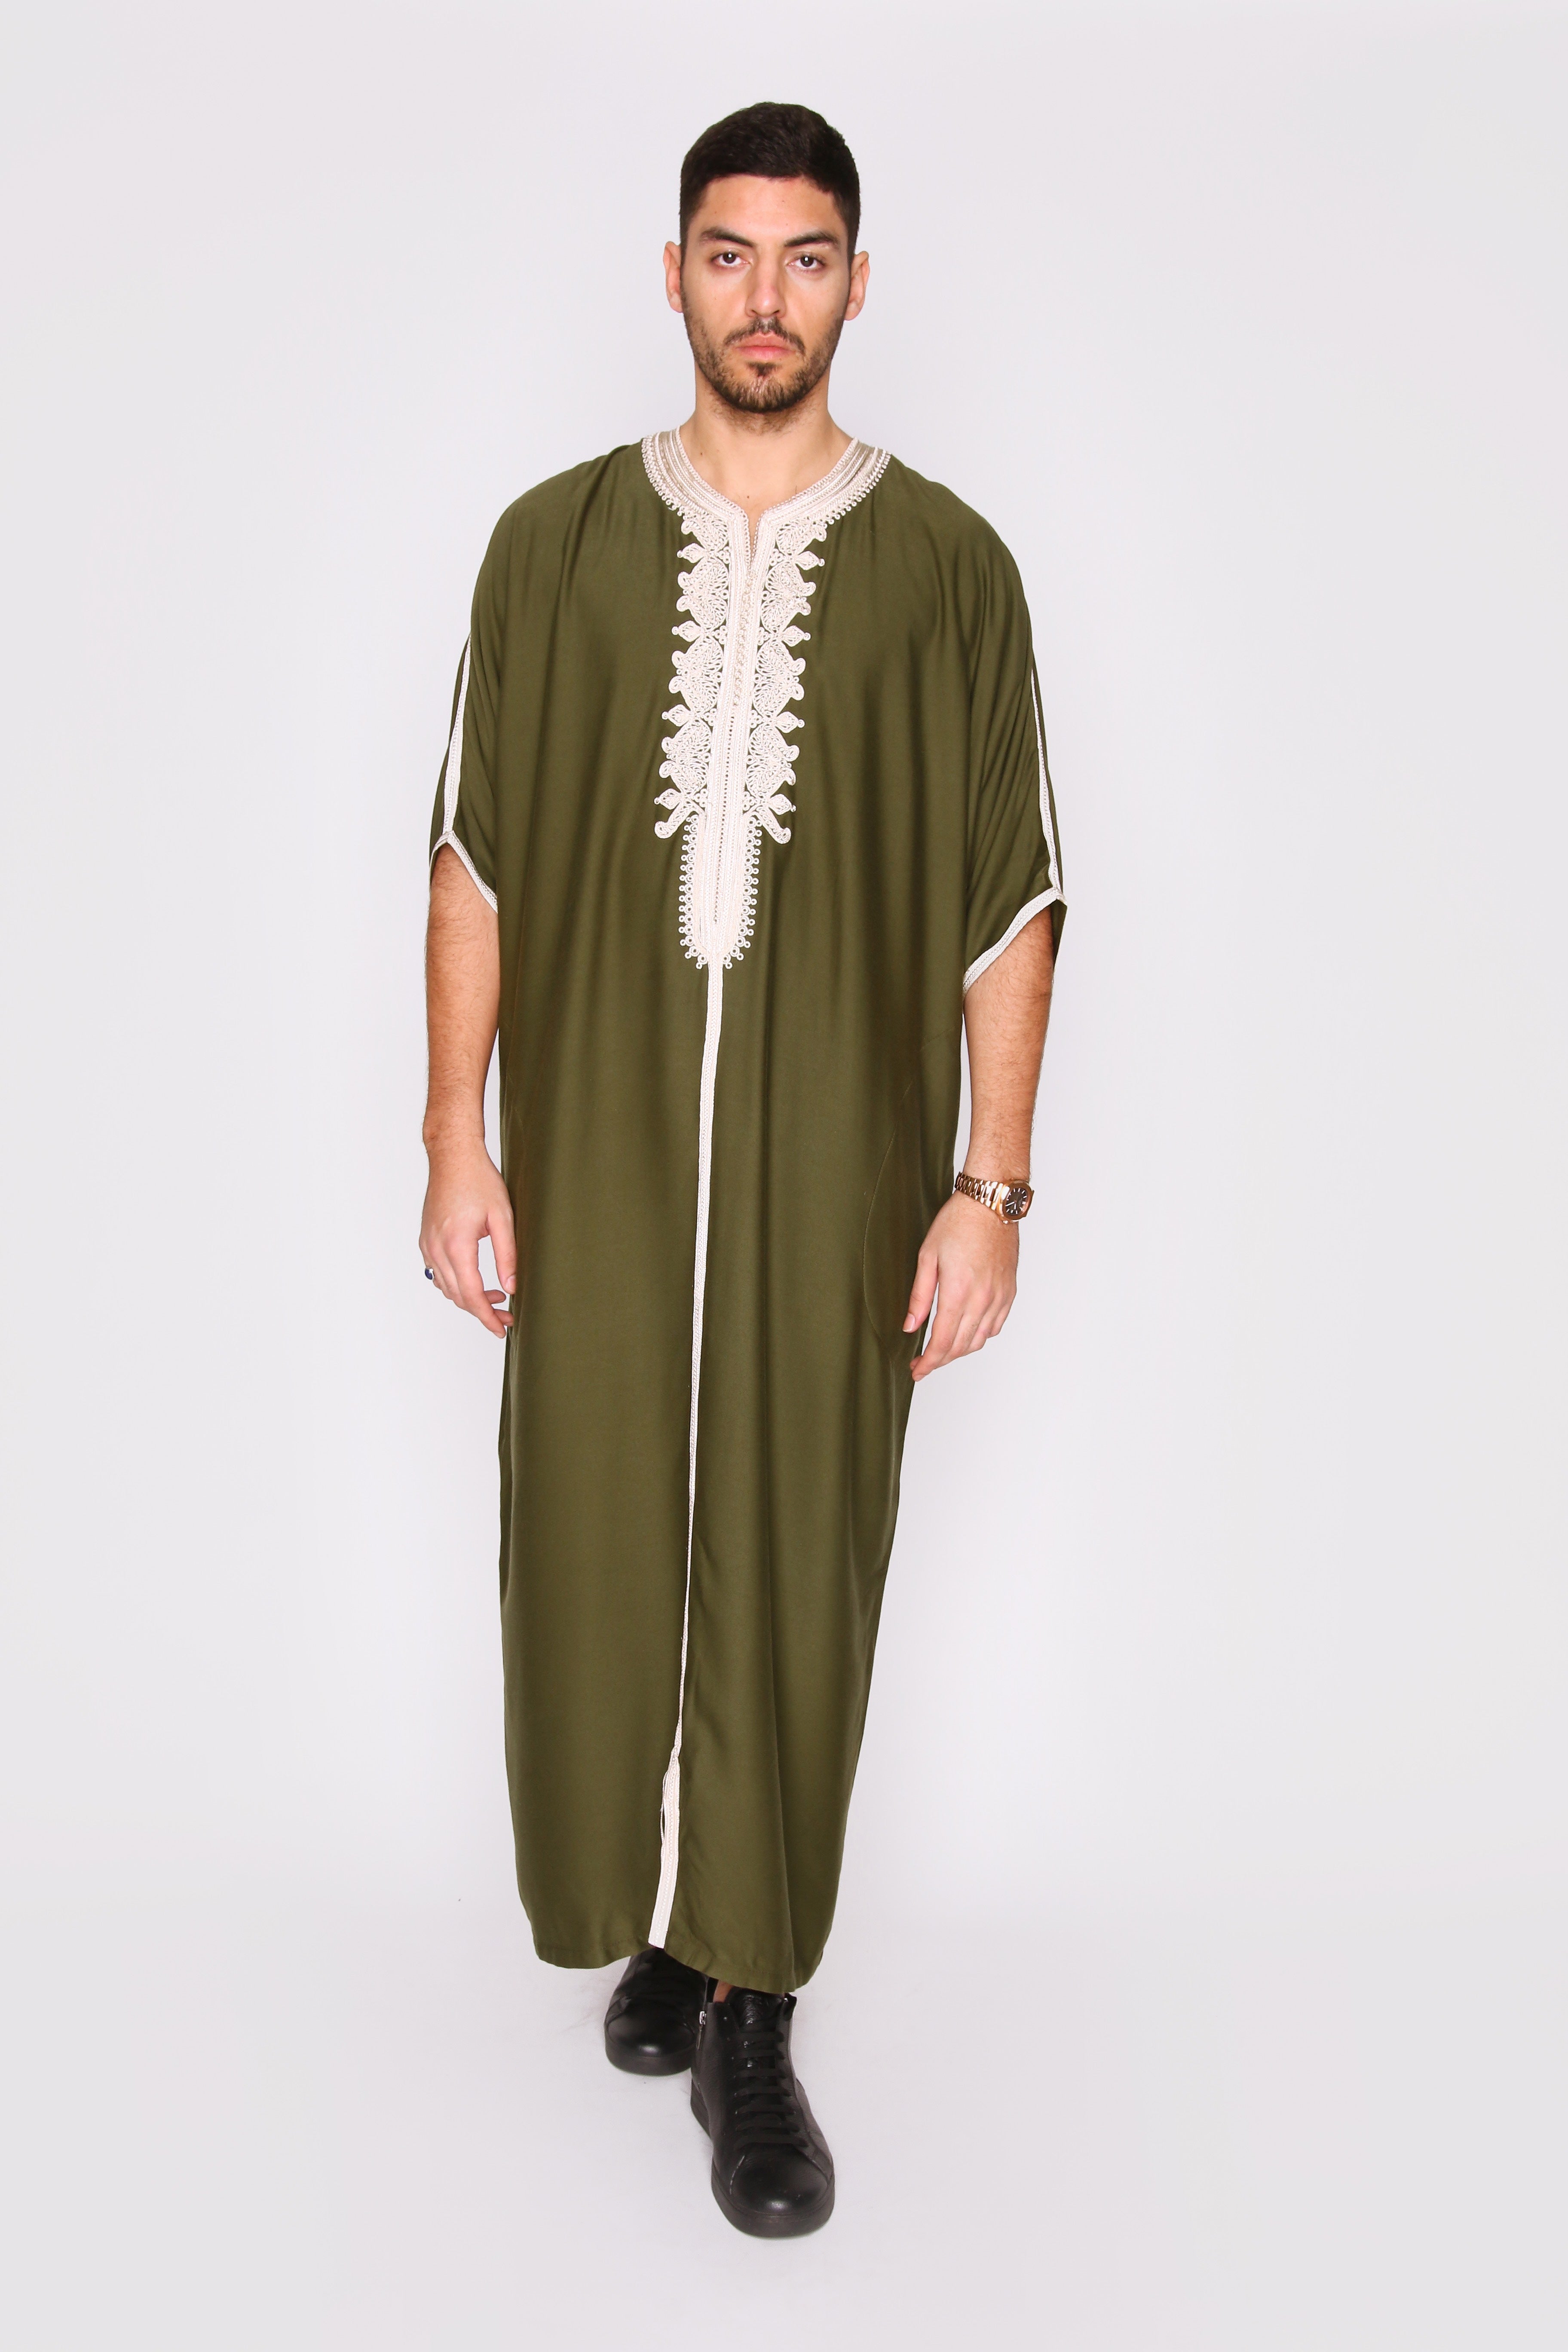 Gandoura Hamza Embroidered Short Sleeve Men's Long Robe Thobe in Khaki